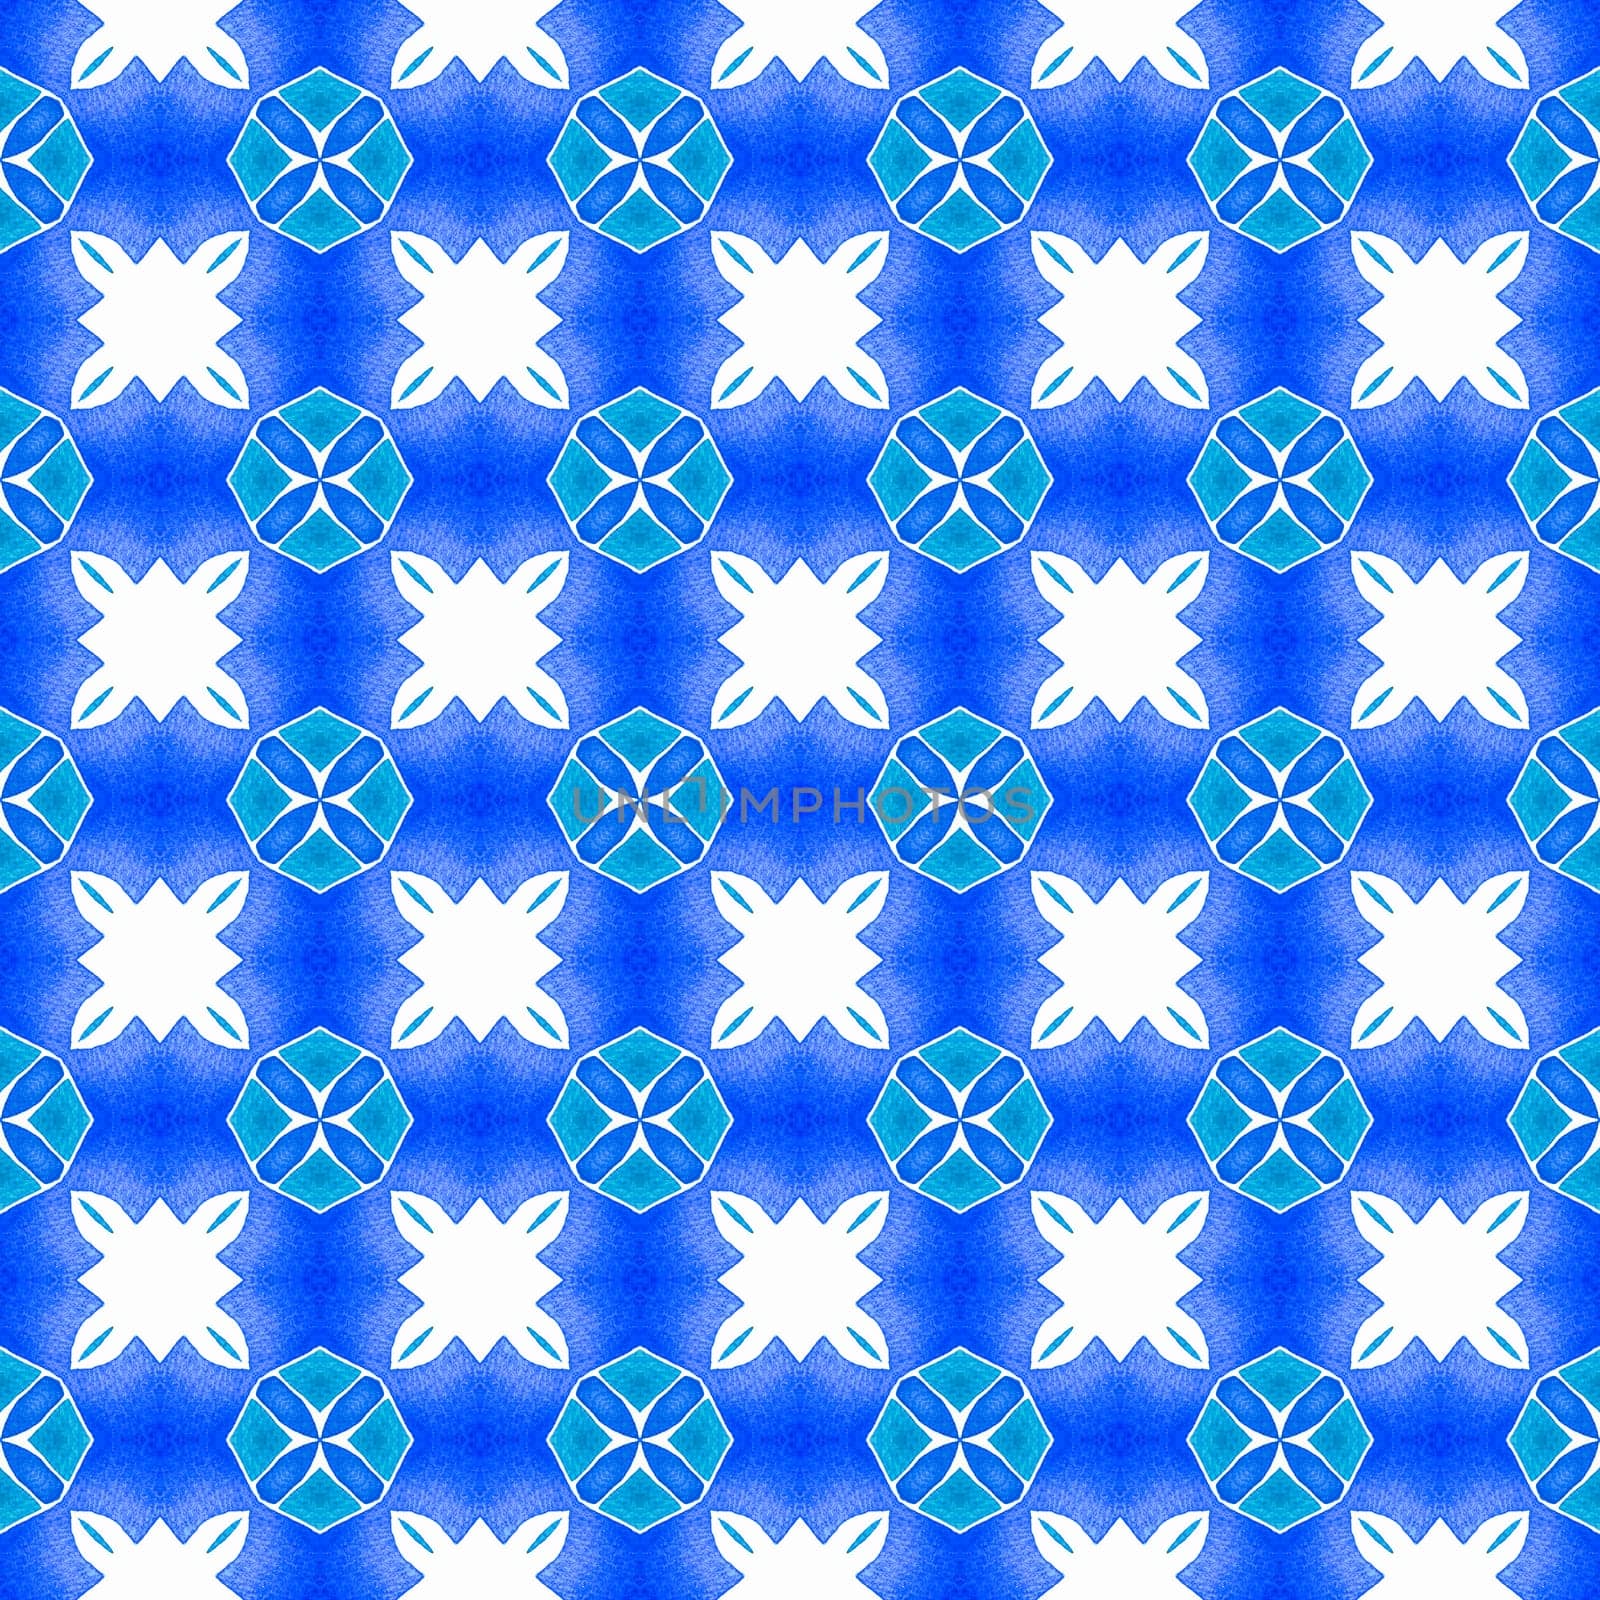 Watercolor ikat repeating tile border. Blue fascinating boho chic summer design. Ikat repeating swimwear design. Textile ready cool print, swimwear fabric, wallpaper, wrapping.